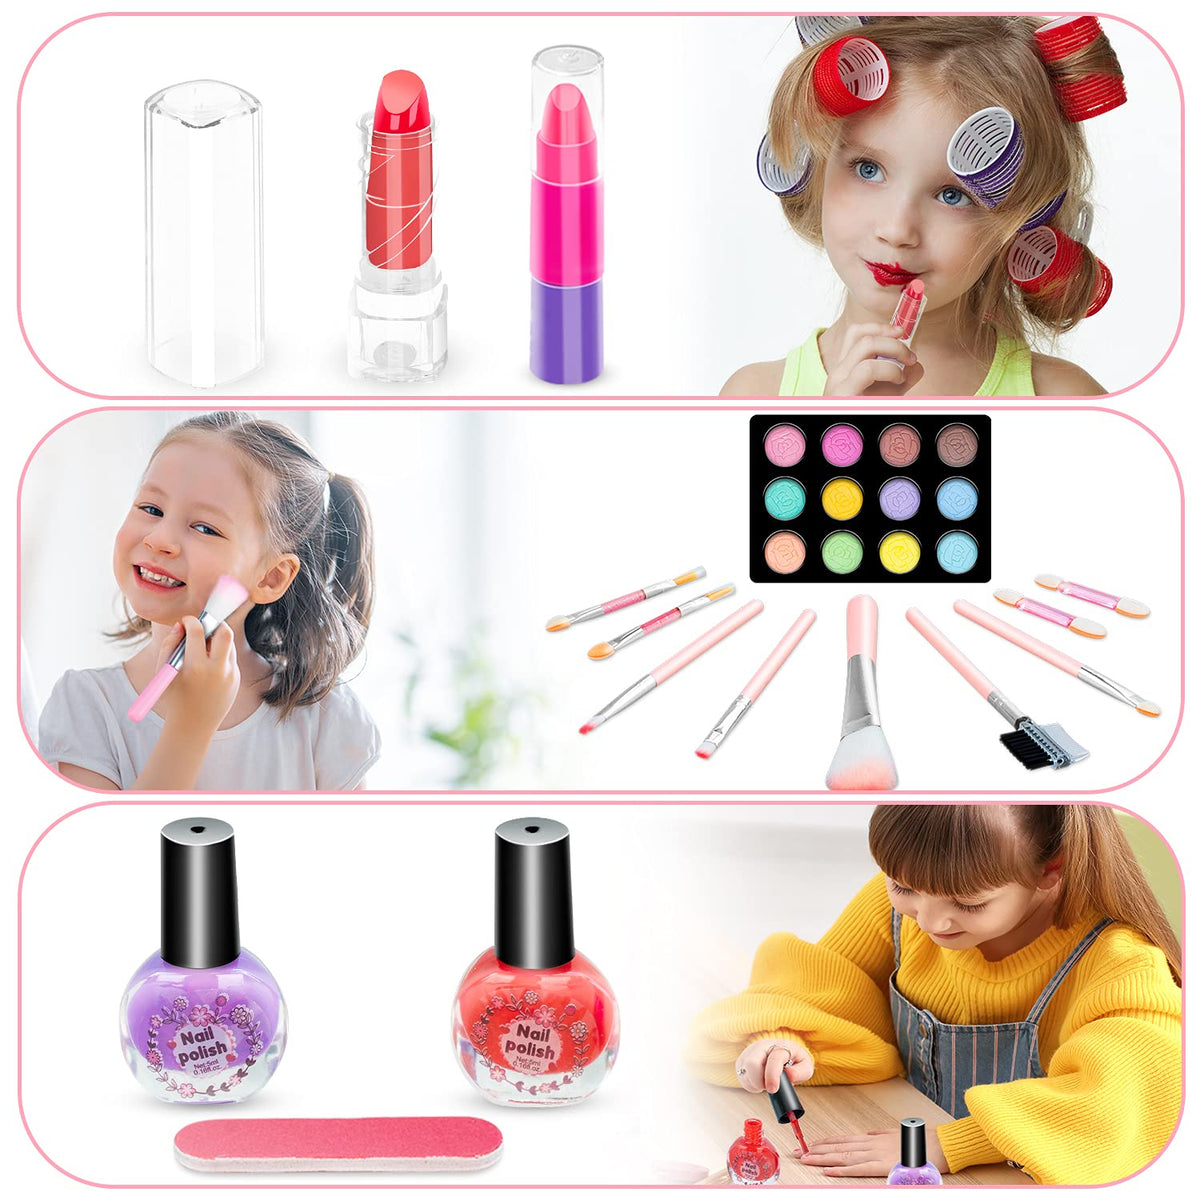 Hollyhi 41 Pcs Kids Makeup Toy Kit for Girls, Washable Makeup Set Toy ...